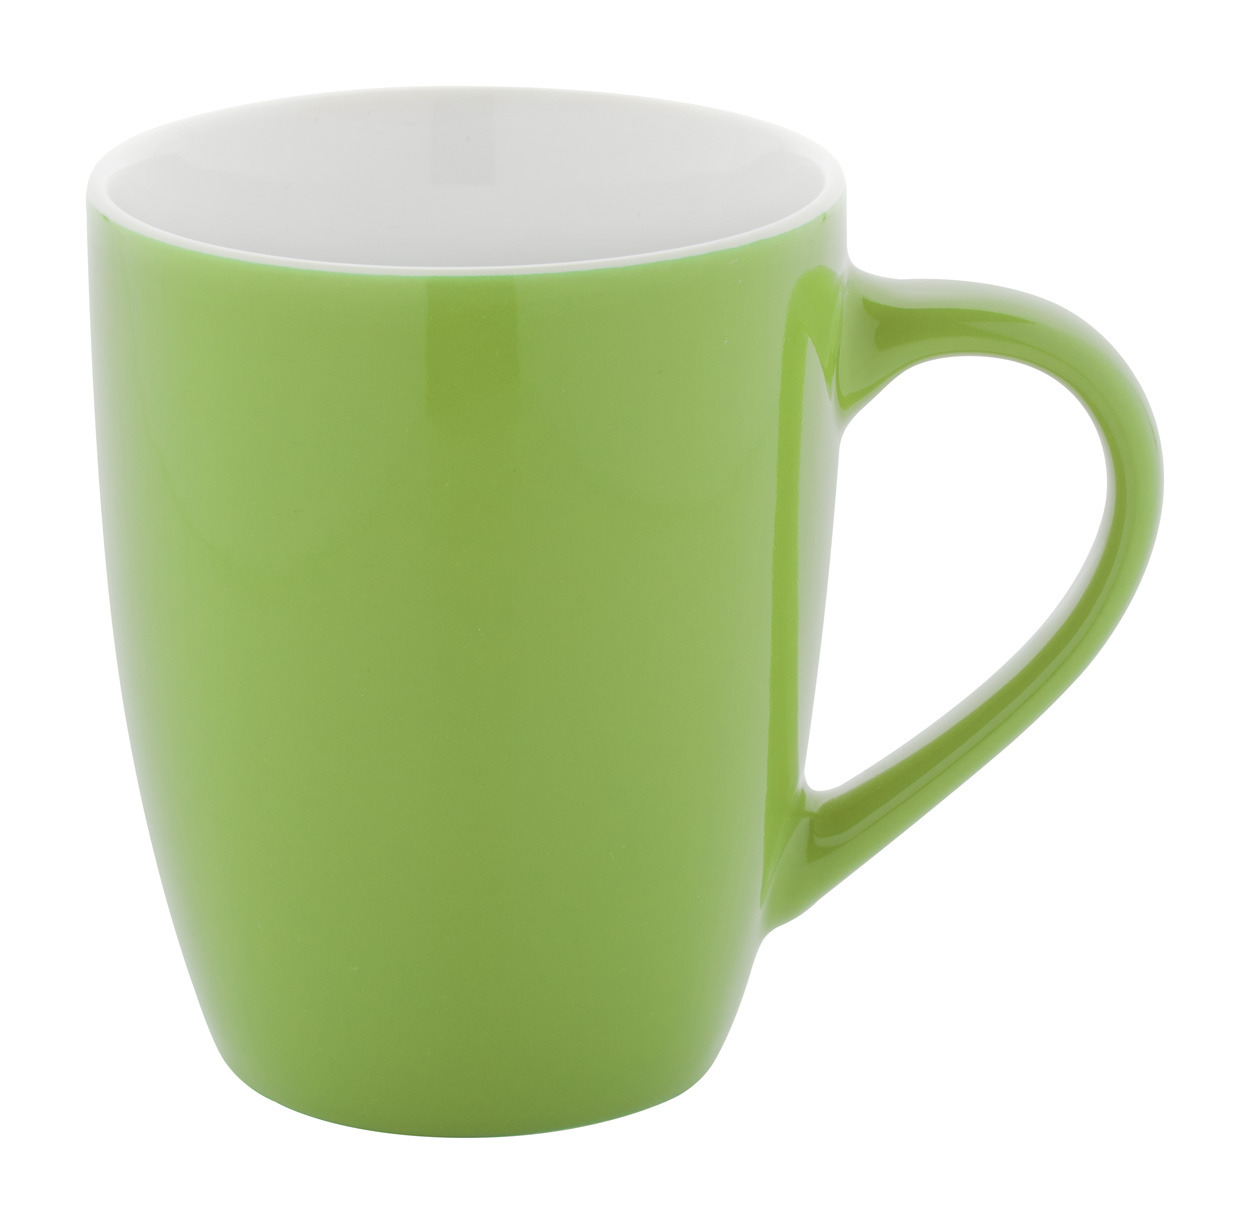 Gaia mug - green